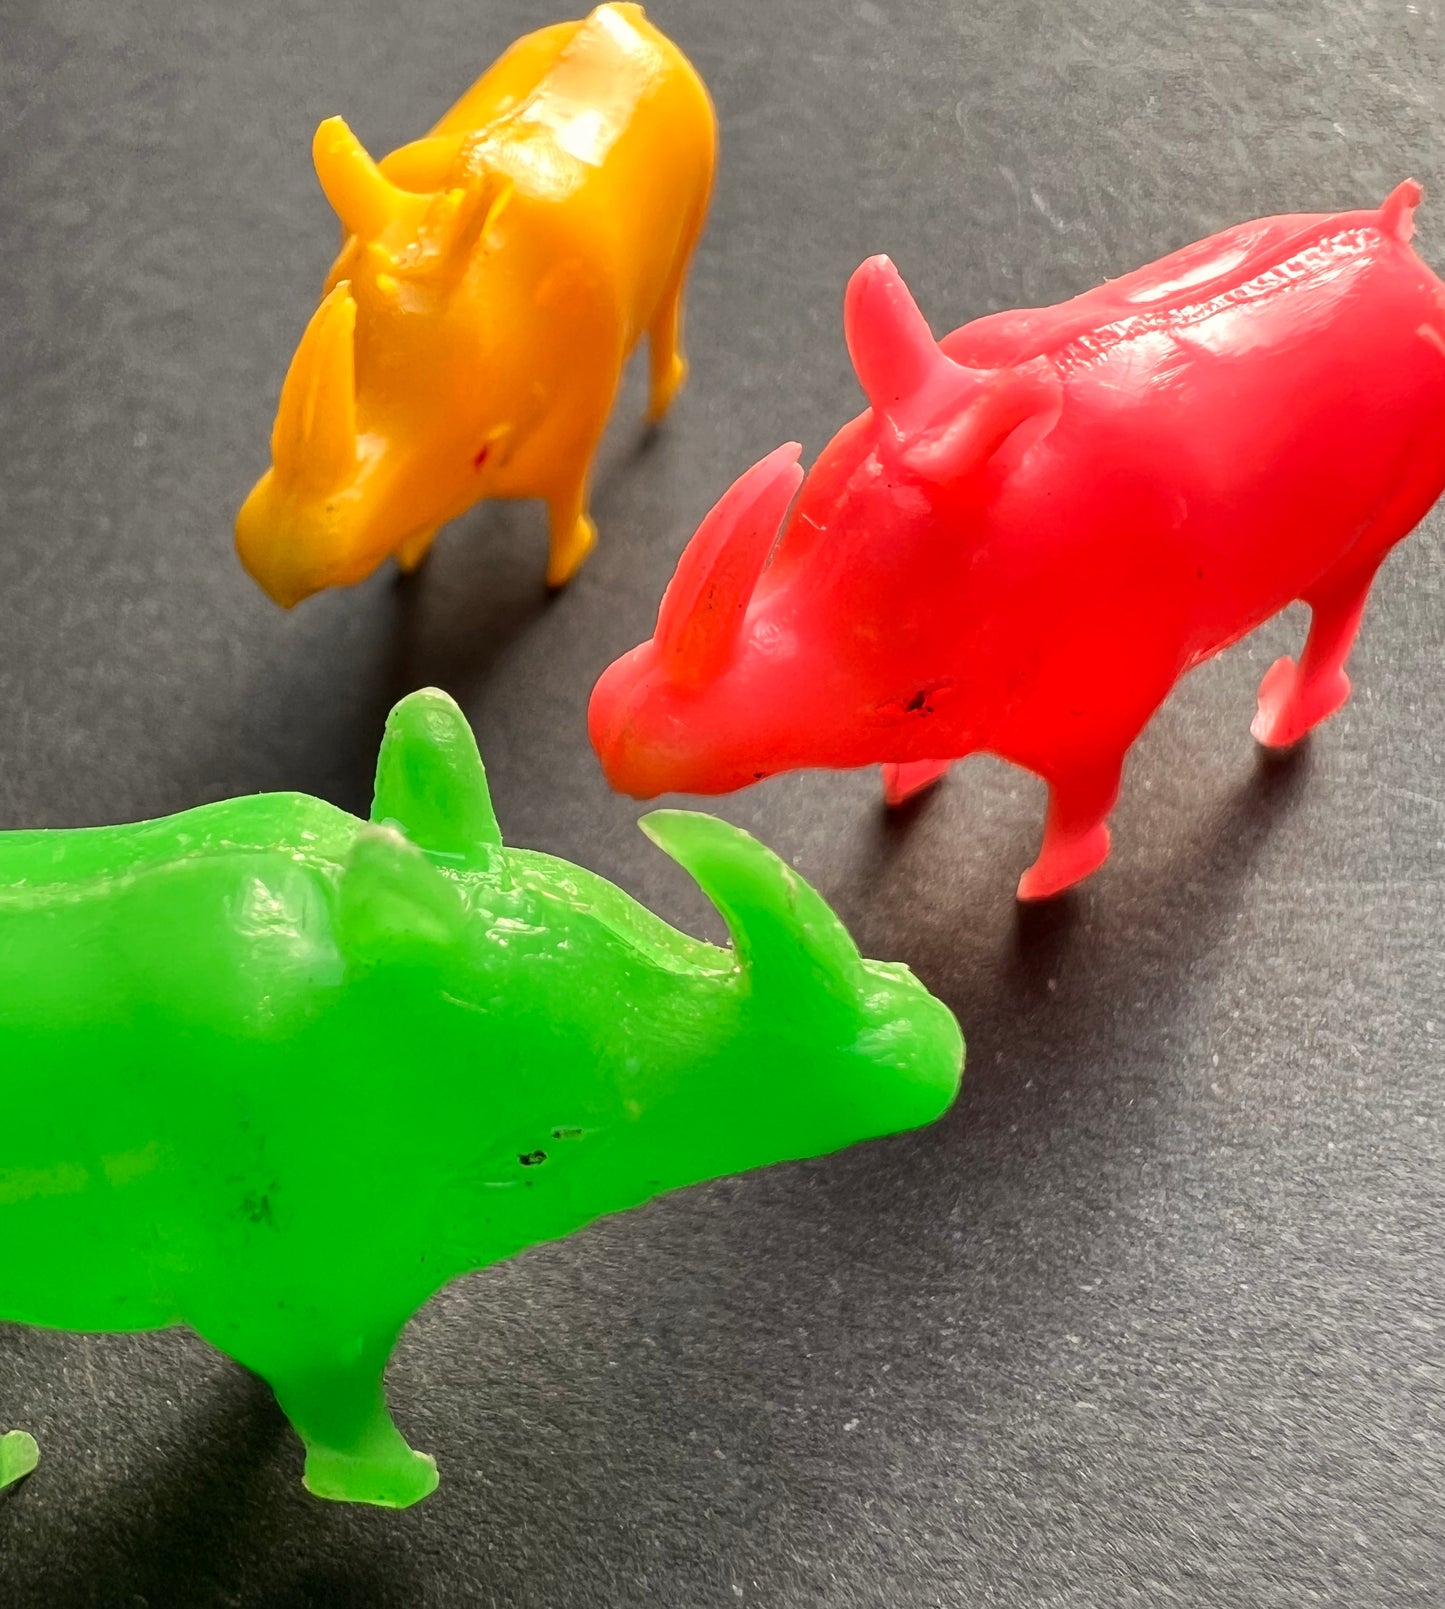 3 Absolutely Essential Small Plastic Rhinoceros